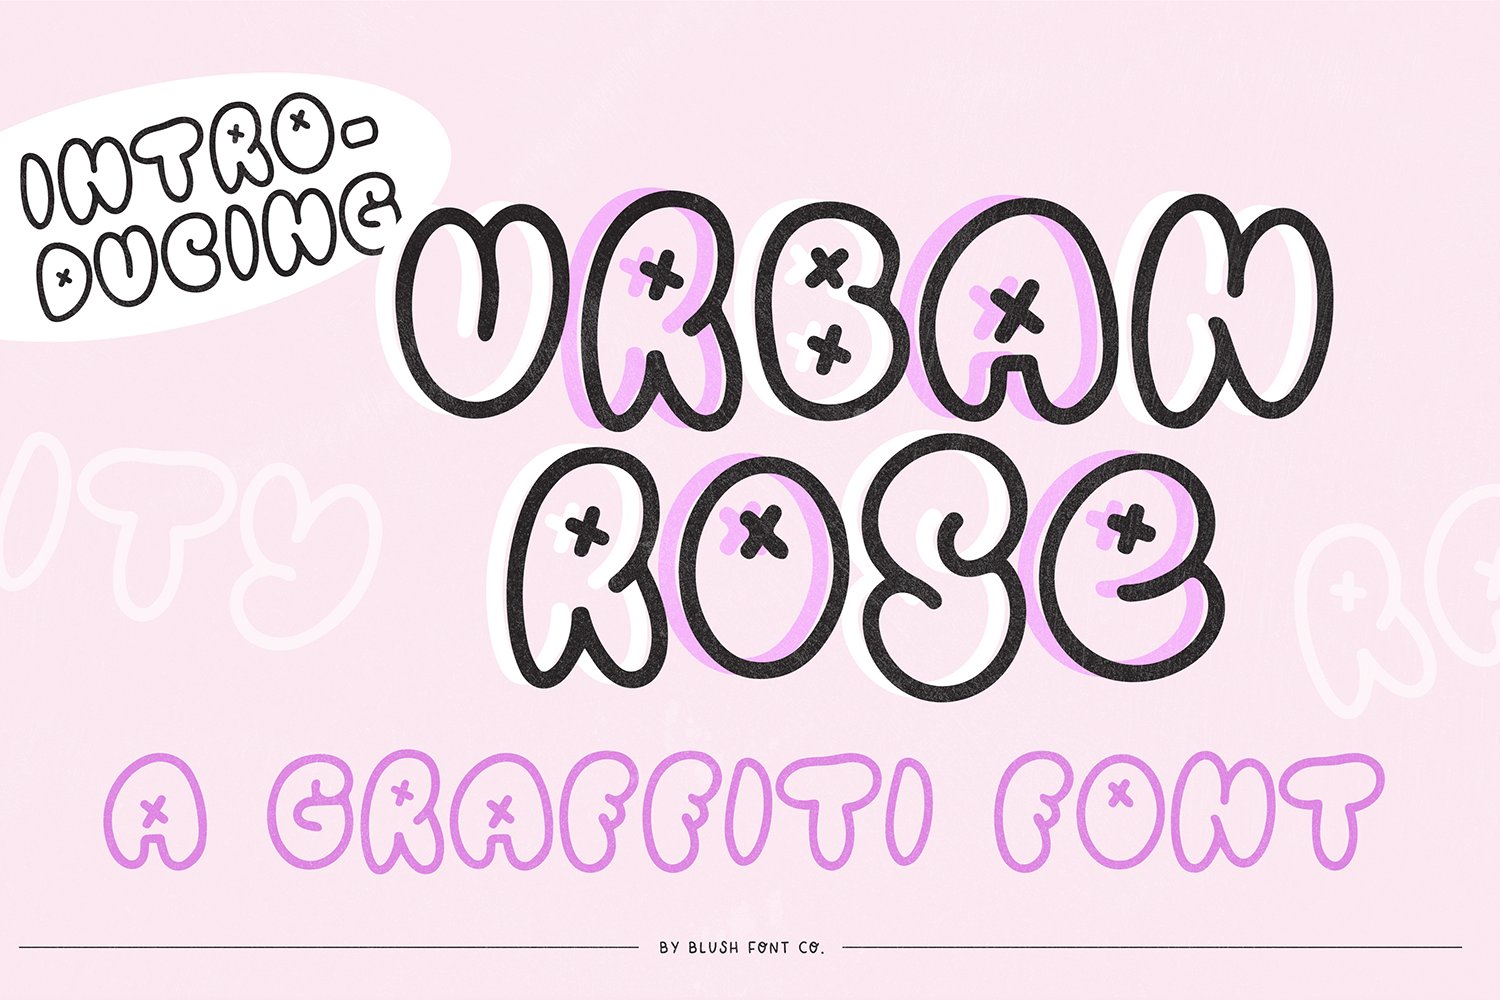 URBAN ROSE Cute Bubble Graffiti Font cover image.